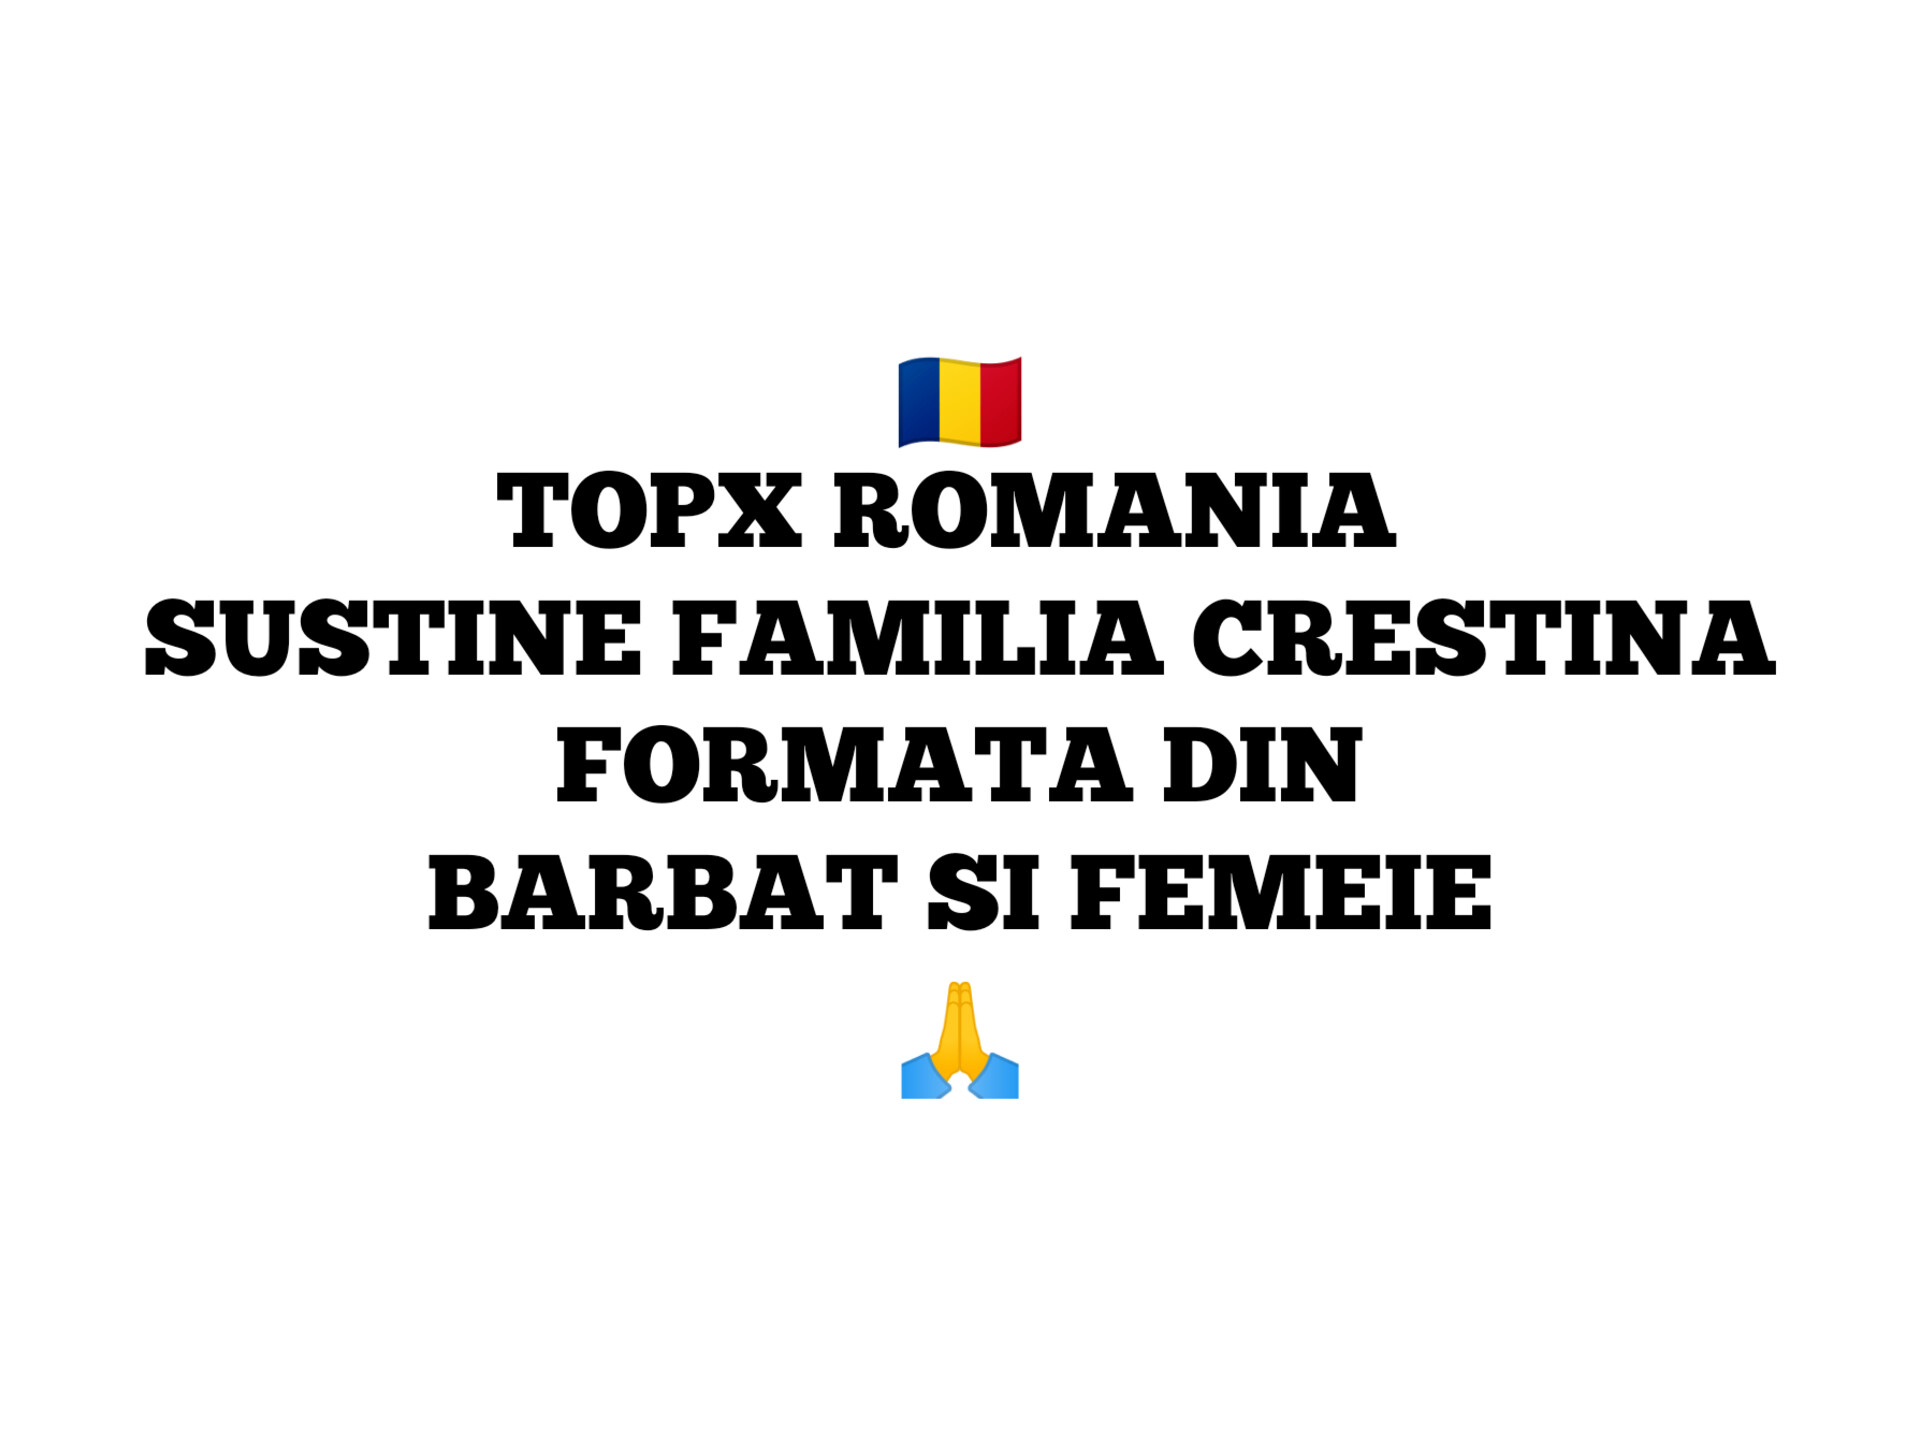 TOPX ROMANIA SUSTINE FAMILIA CRESTINA FORMATA DIN BARBAT SI FEMEIE